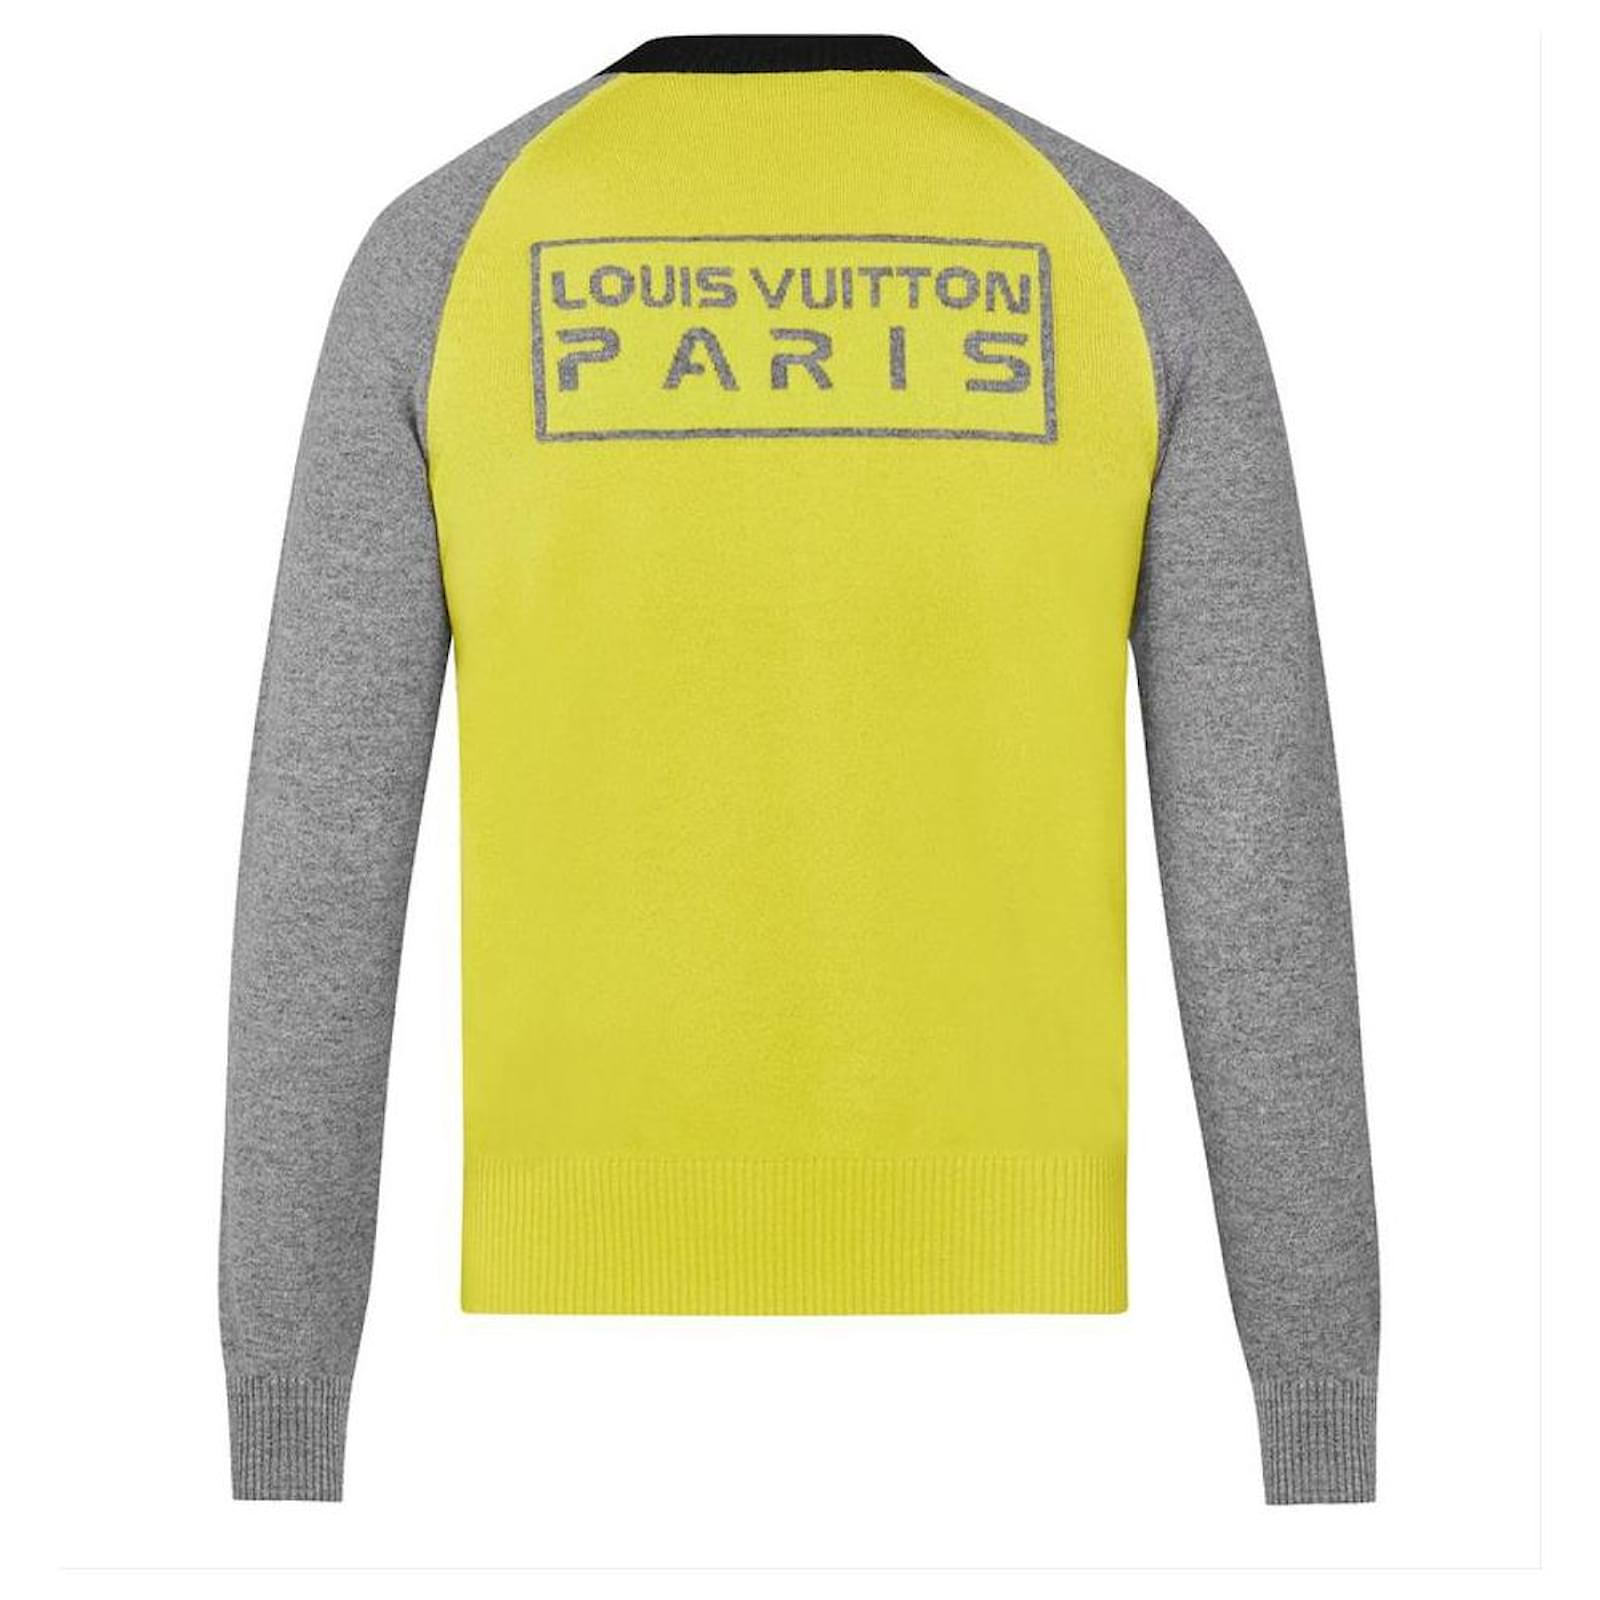 Louis Vuitton Sweathirts & Pullovers for Men